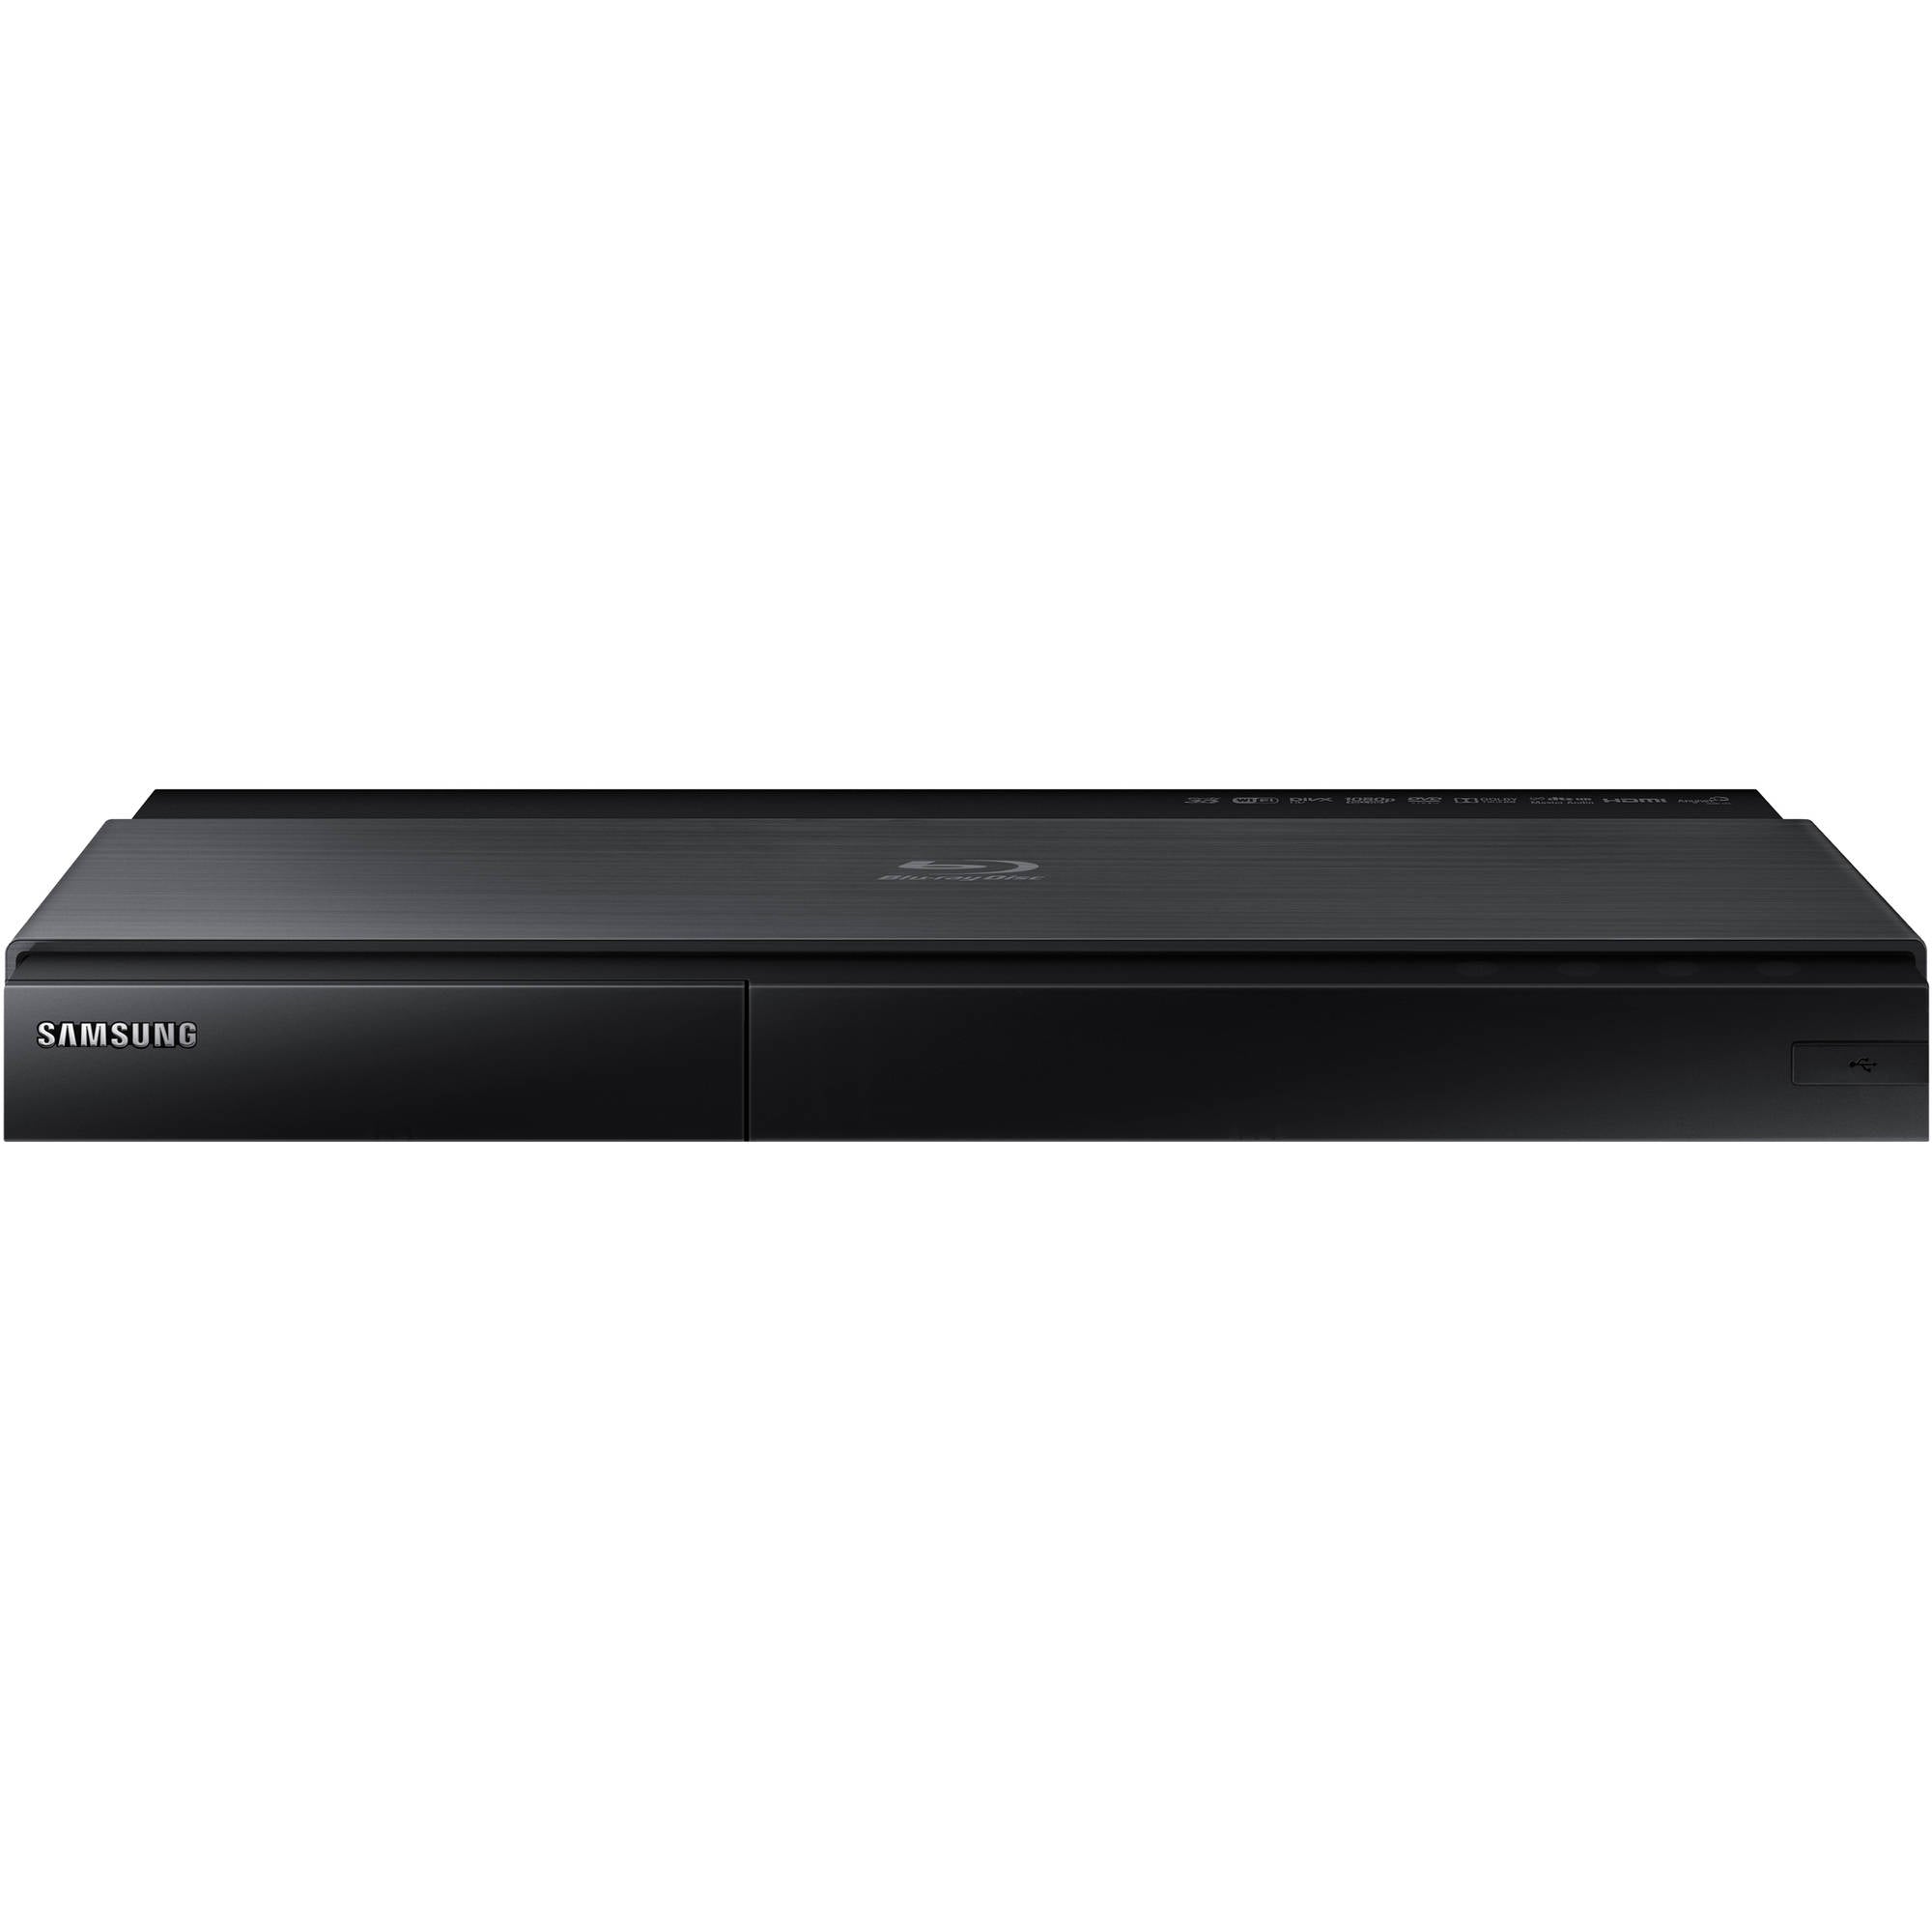 Samsung BDJ7500/ZA Blu-ray Disc Player, Bd-j7500, United States